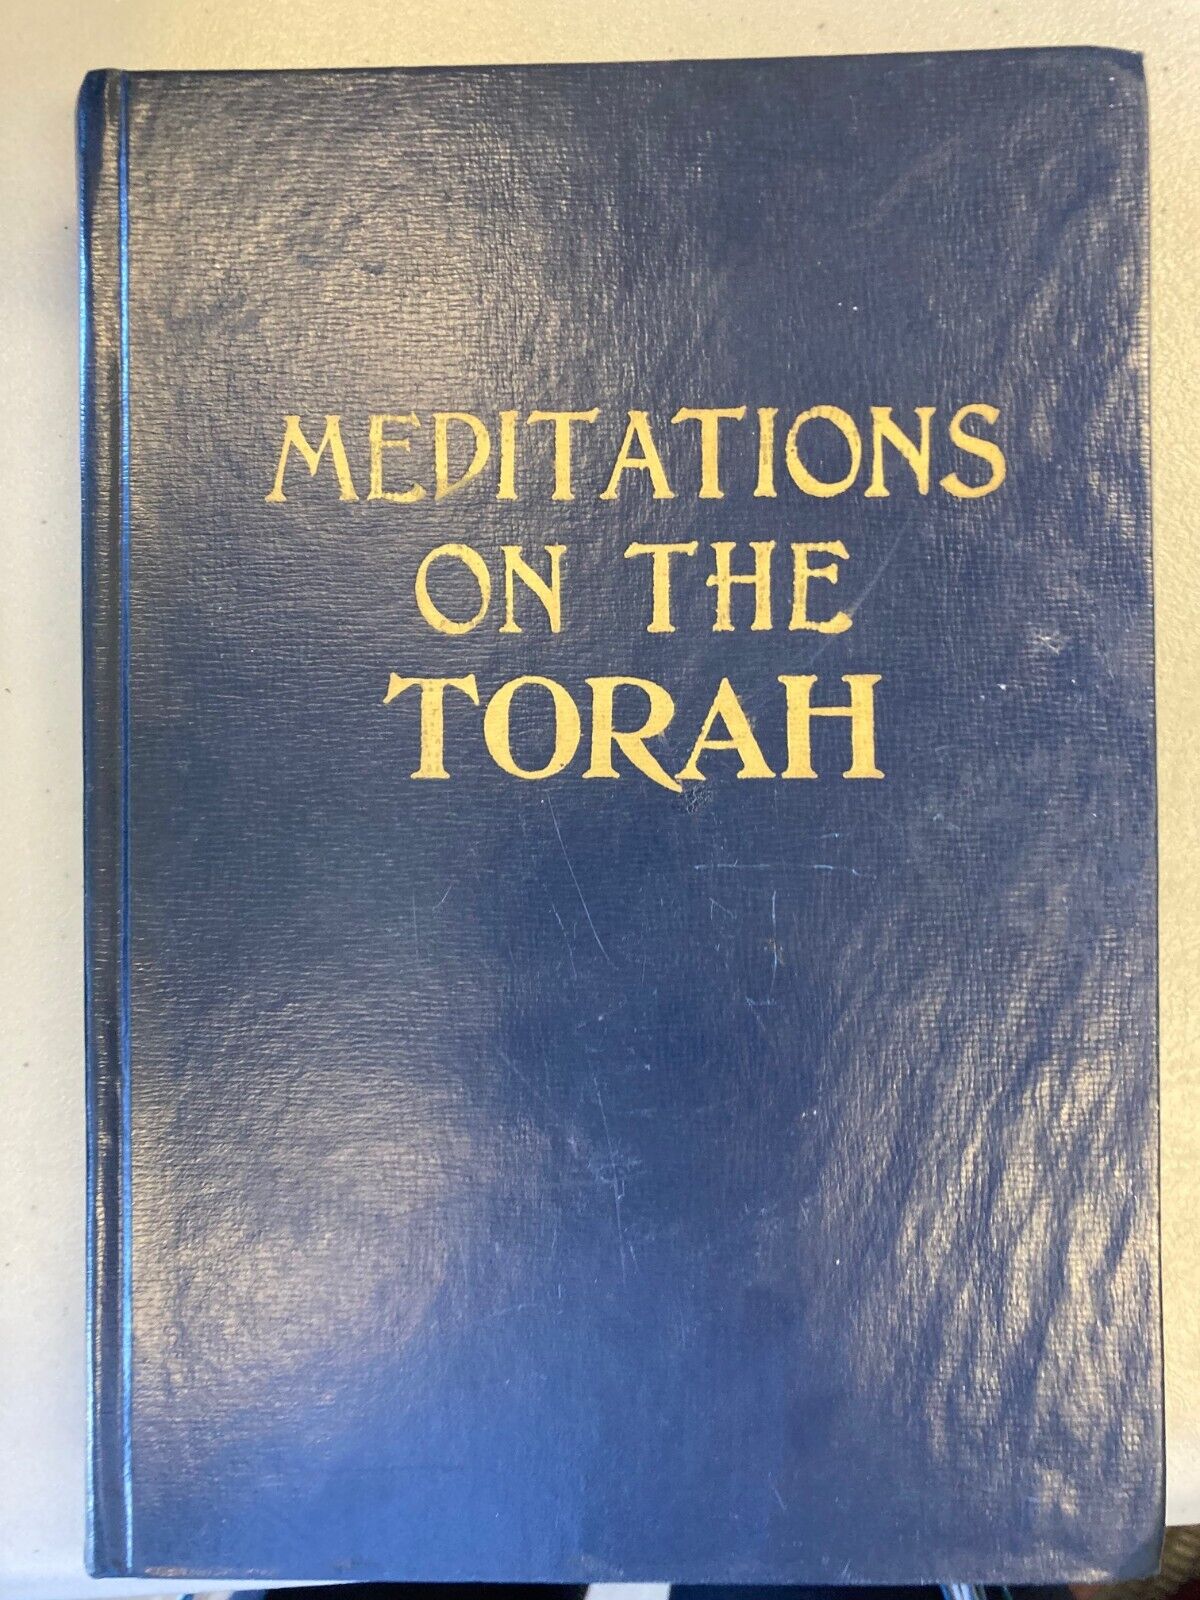 Meditations on the Torah: Topical Discourses on Torah by Rabbi Jacobson